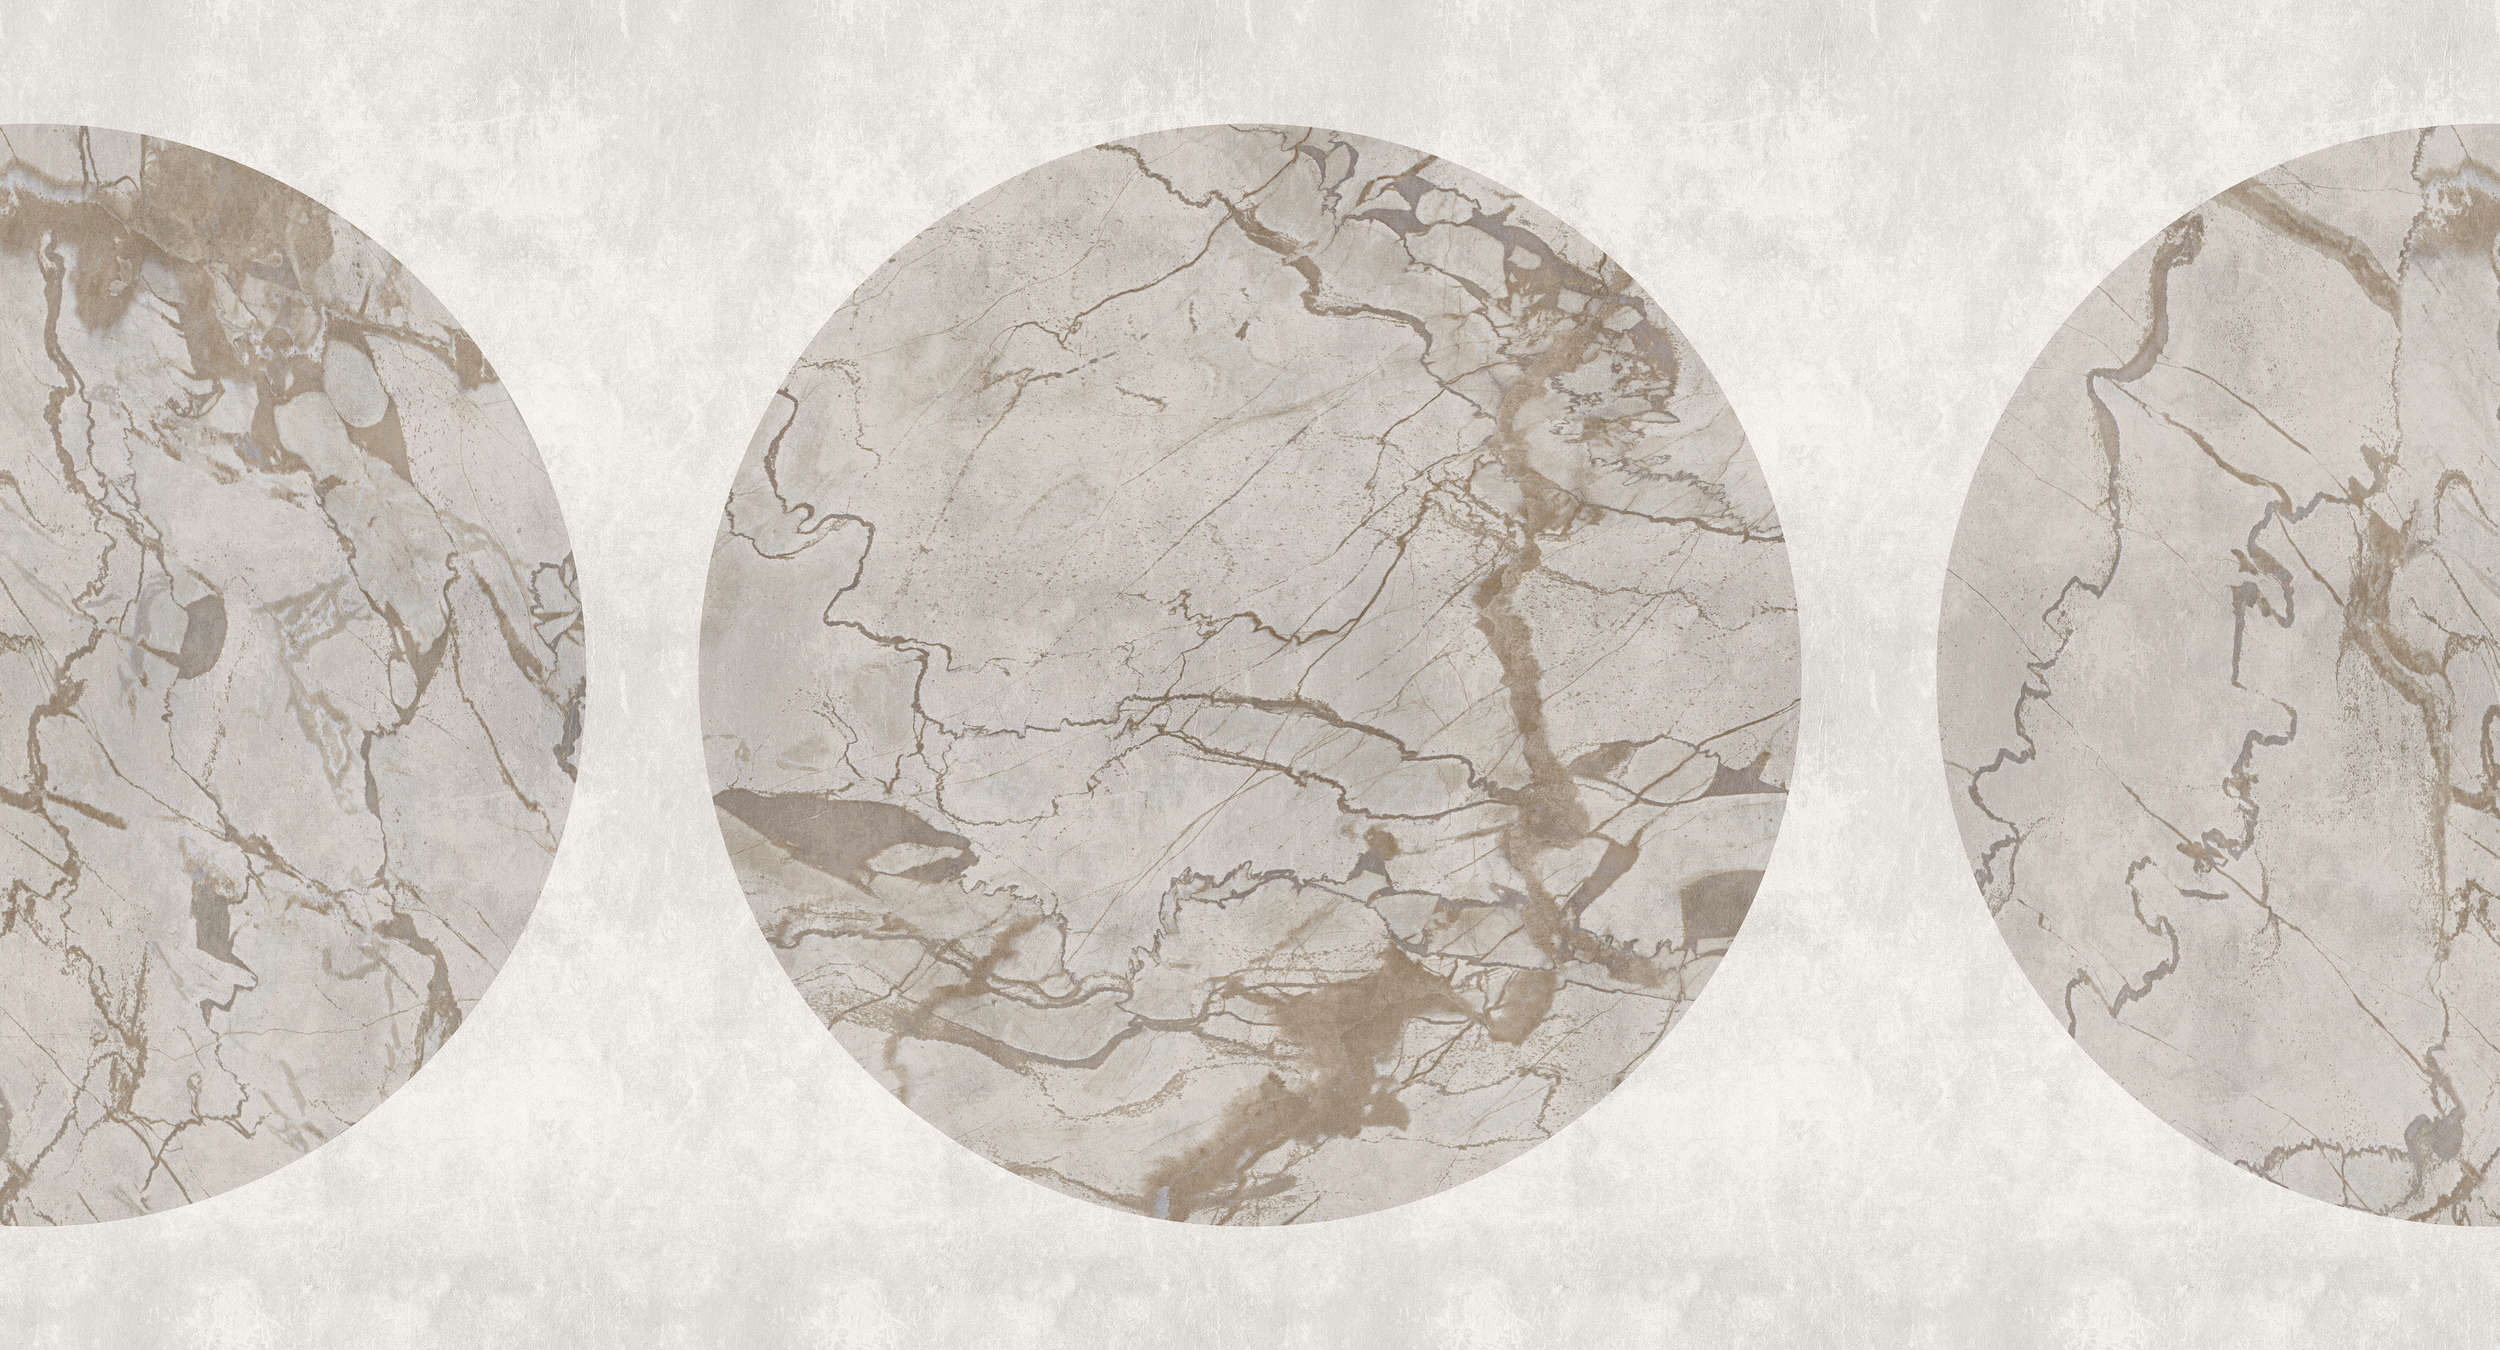             Mercurio 1 – Graue Fototapete Marmor Greige mit Kreis Motiv
        